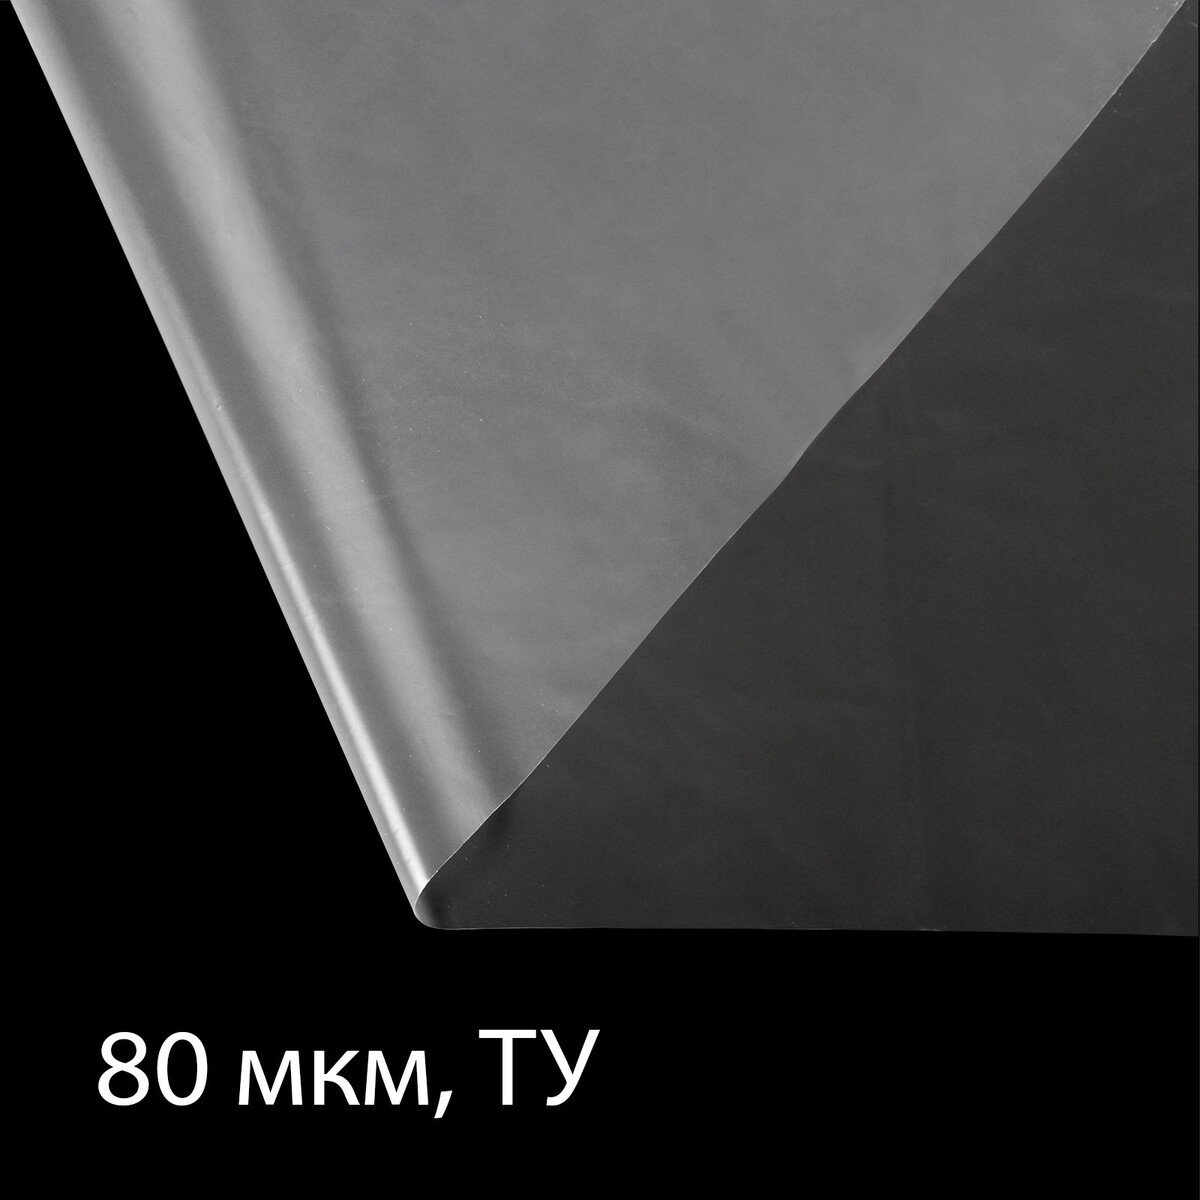 Пленка полиэтиленовая 80 мкм, прозрачная, длина 10 м, ширина 3 м, рукав (1.5 м × 2), эконом 50% пленка полиэтиленовая толщина 150 мкм прозрачная 5 × 3 м рукав 1 5 × 2 м эконом 50%